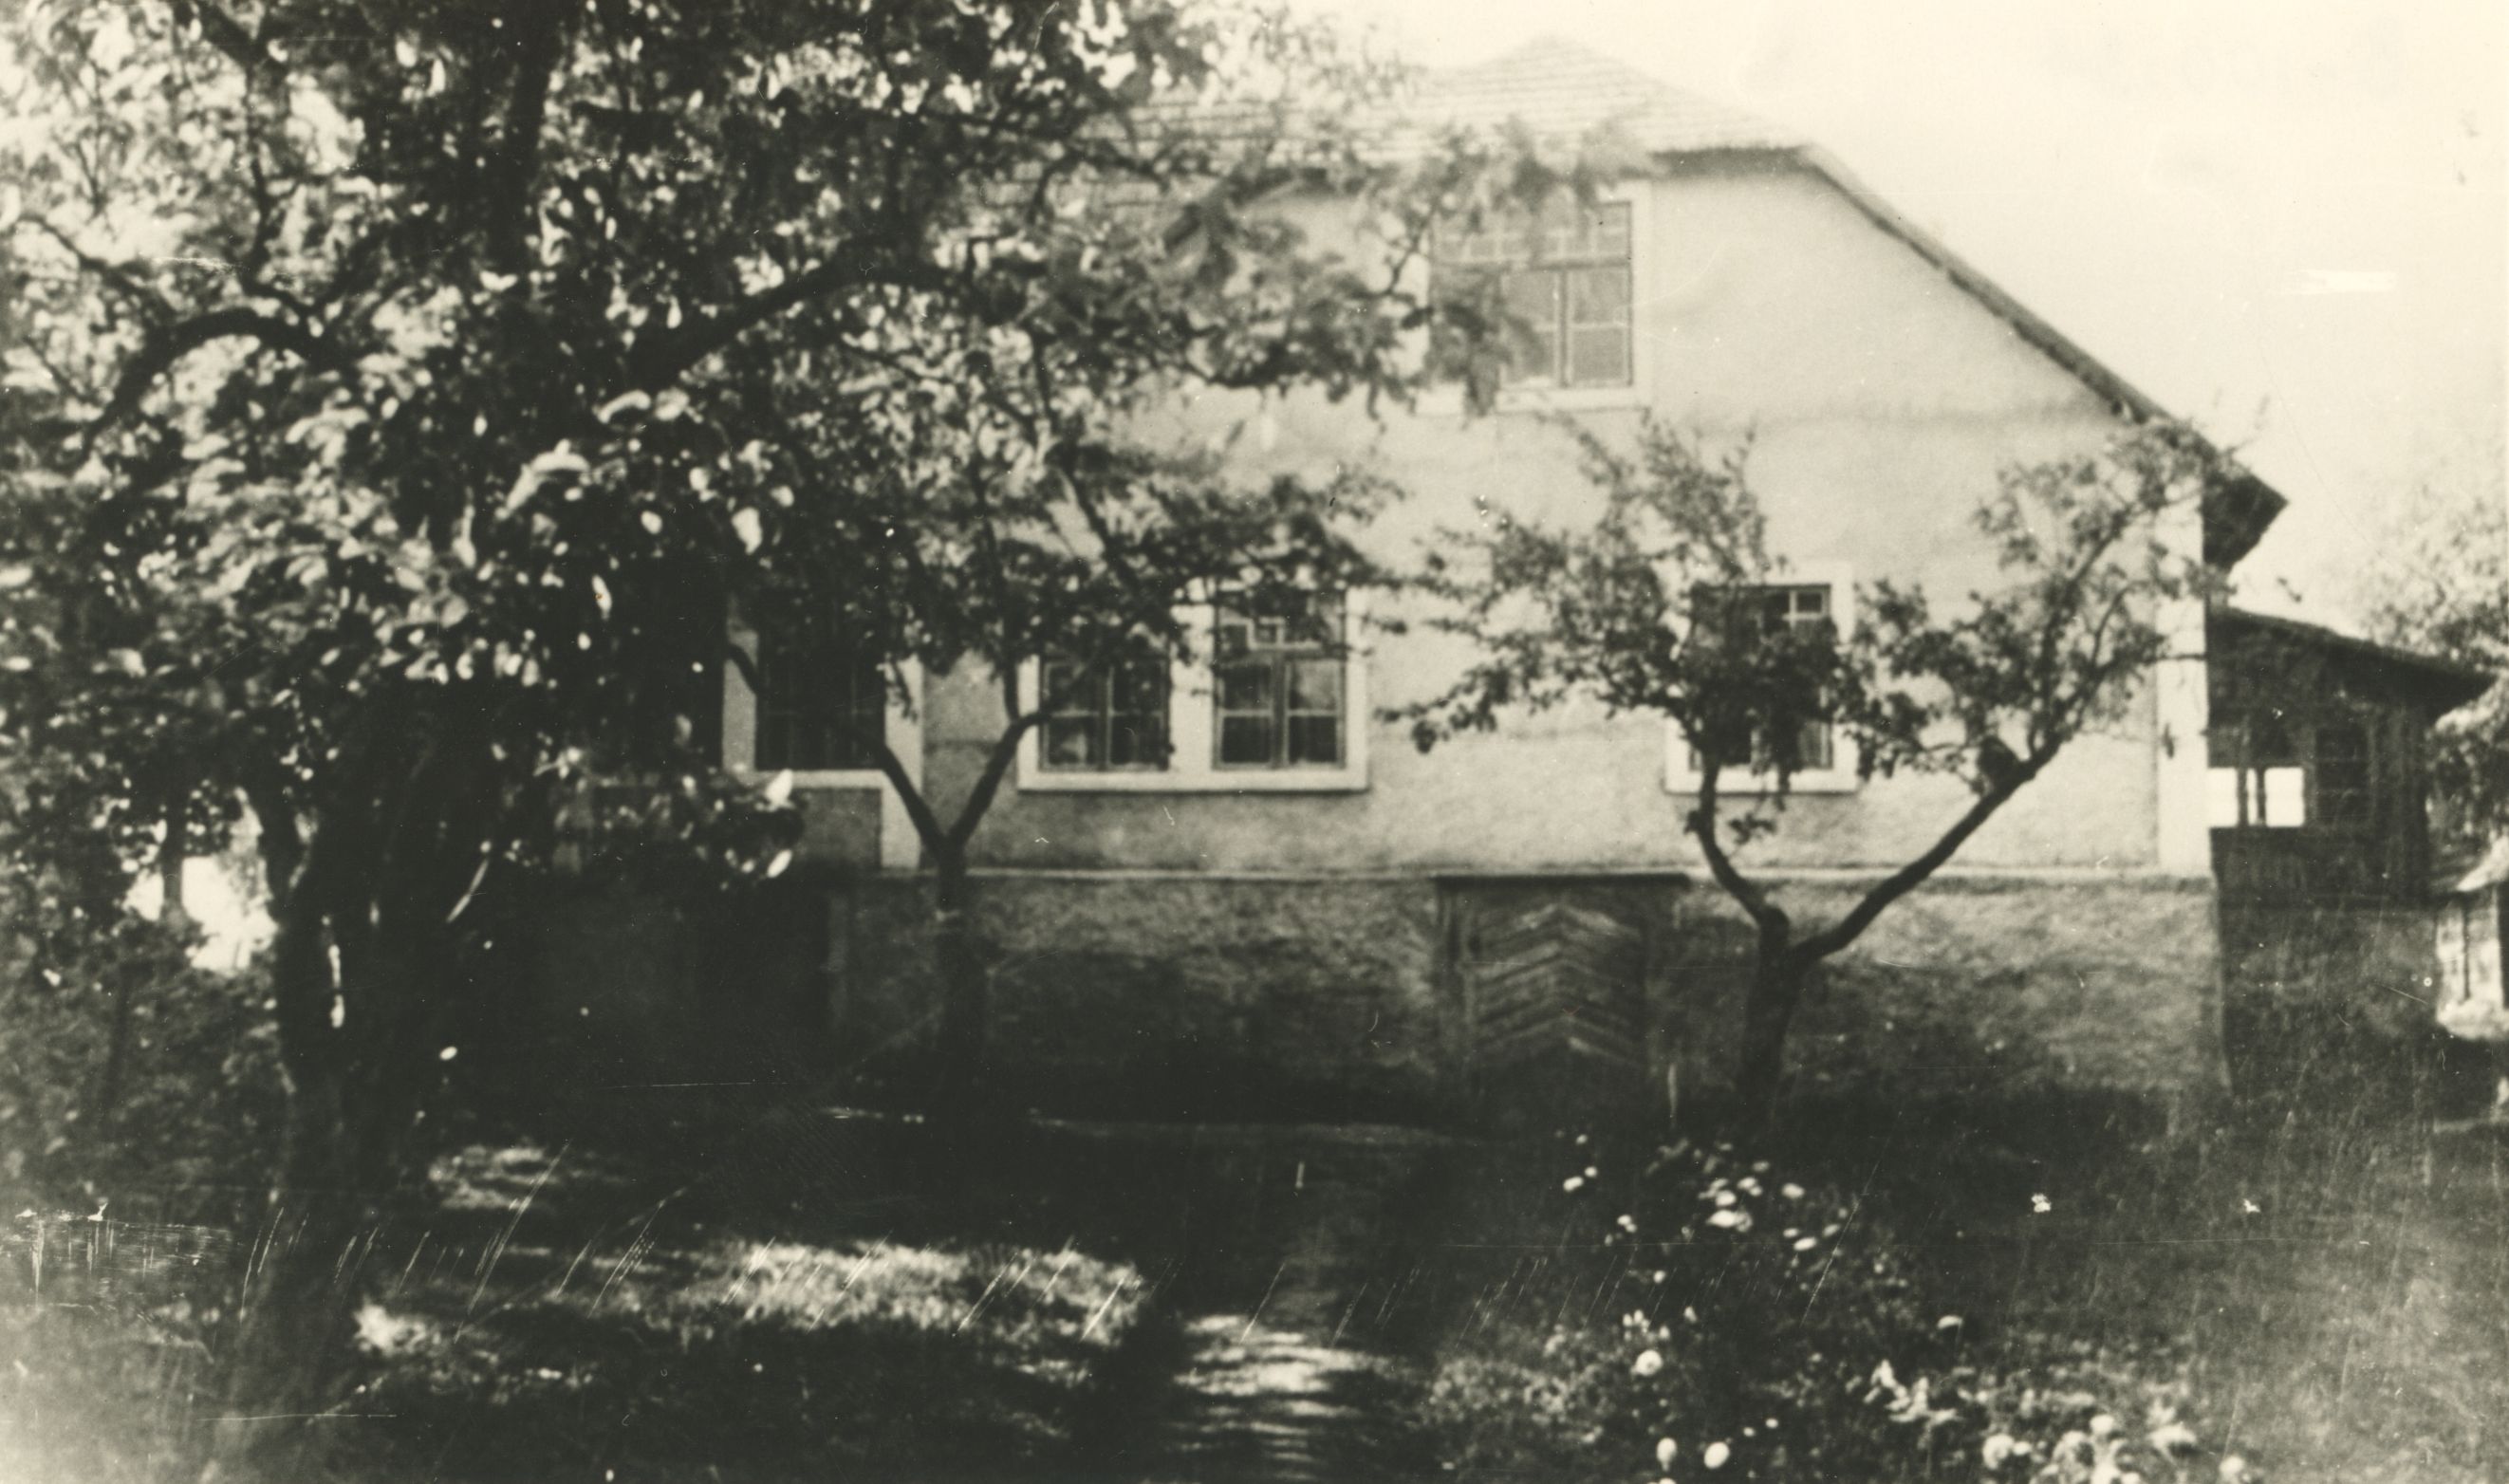 Jaan Kärner's birthplace in Kängsepa Kirepi municipality in 1936